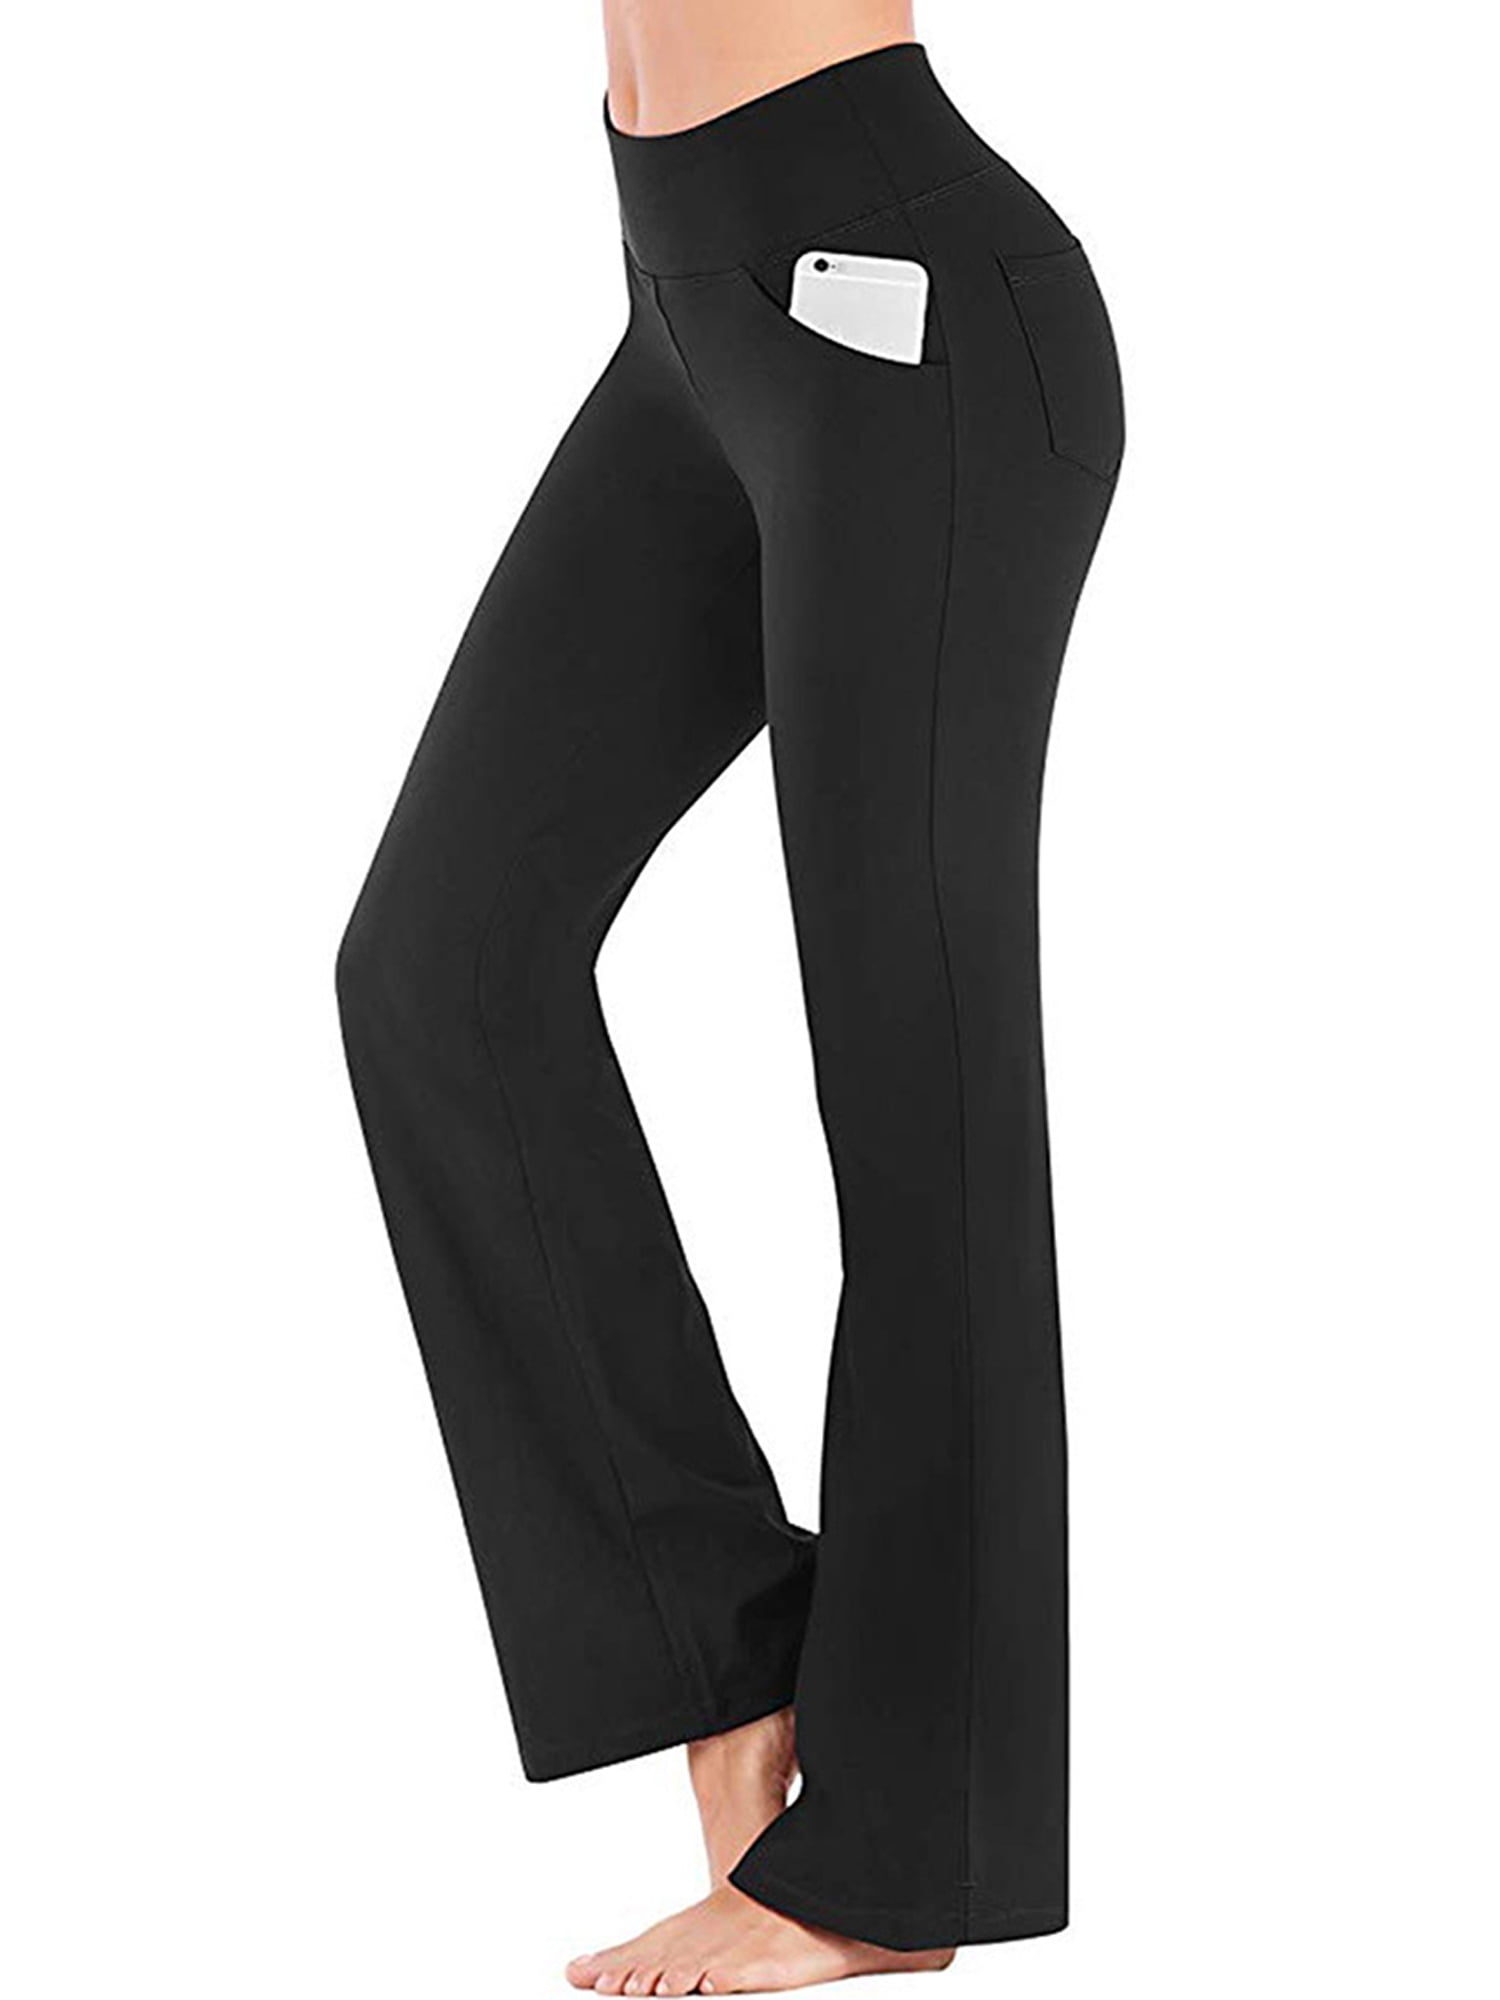 Women's buttR Yoga Pants - Midnight Black (Double Pocket) - Kosha Yoga Co.